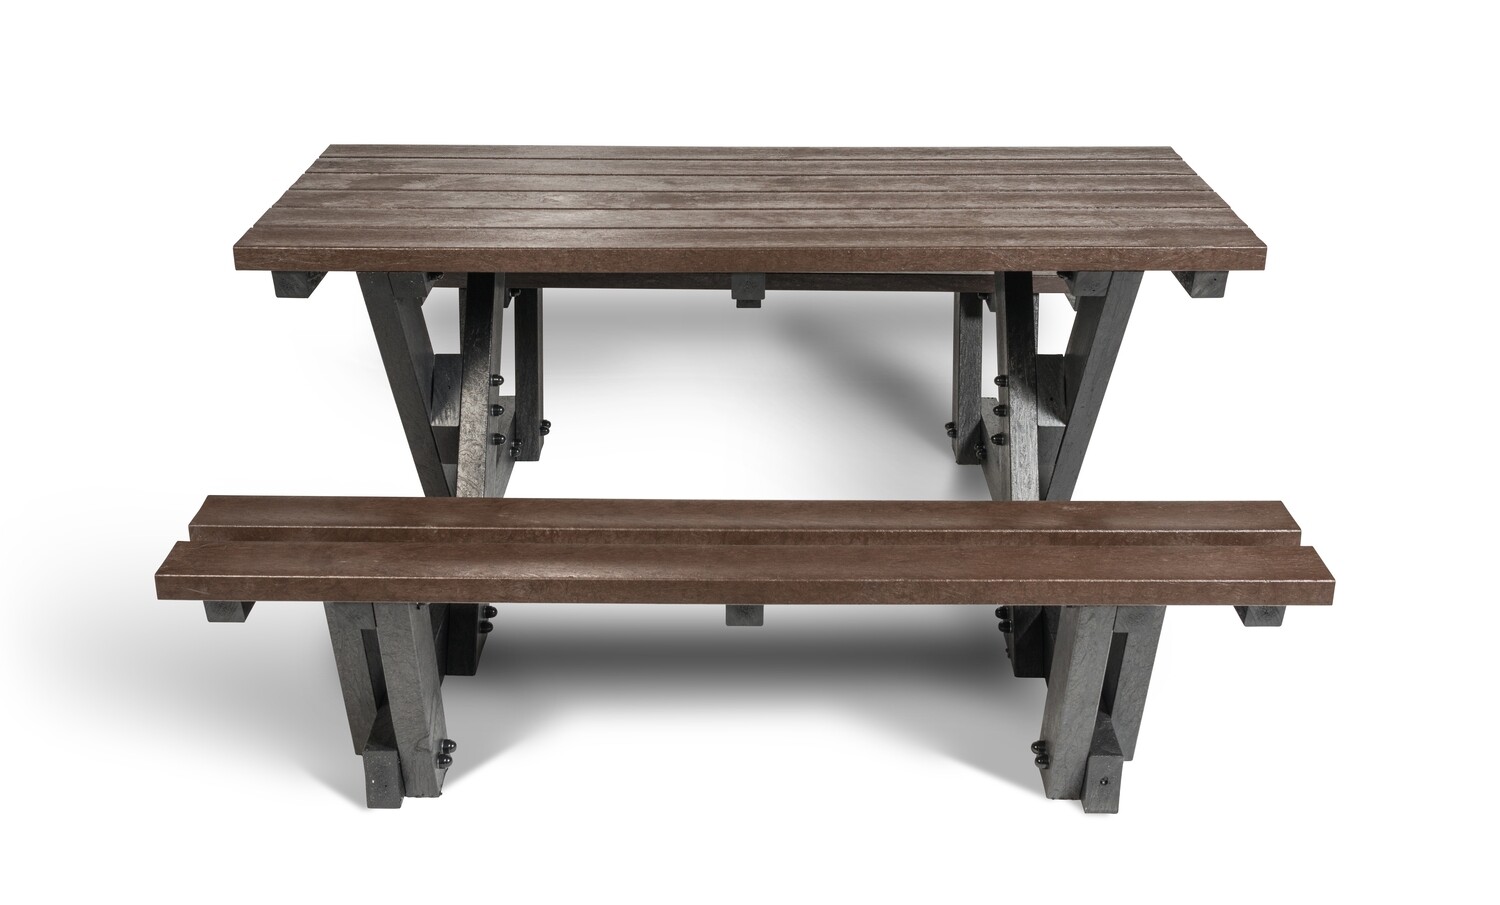 The Duke easy-access picnic table 1.5m